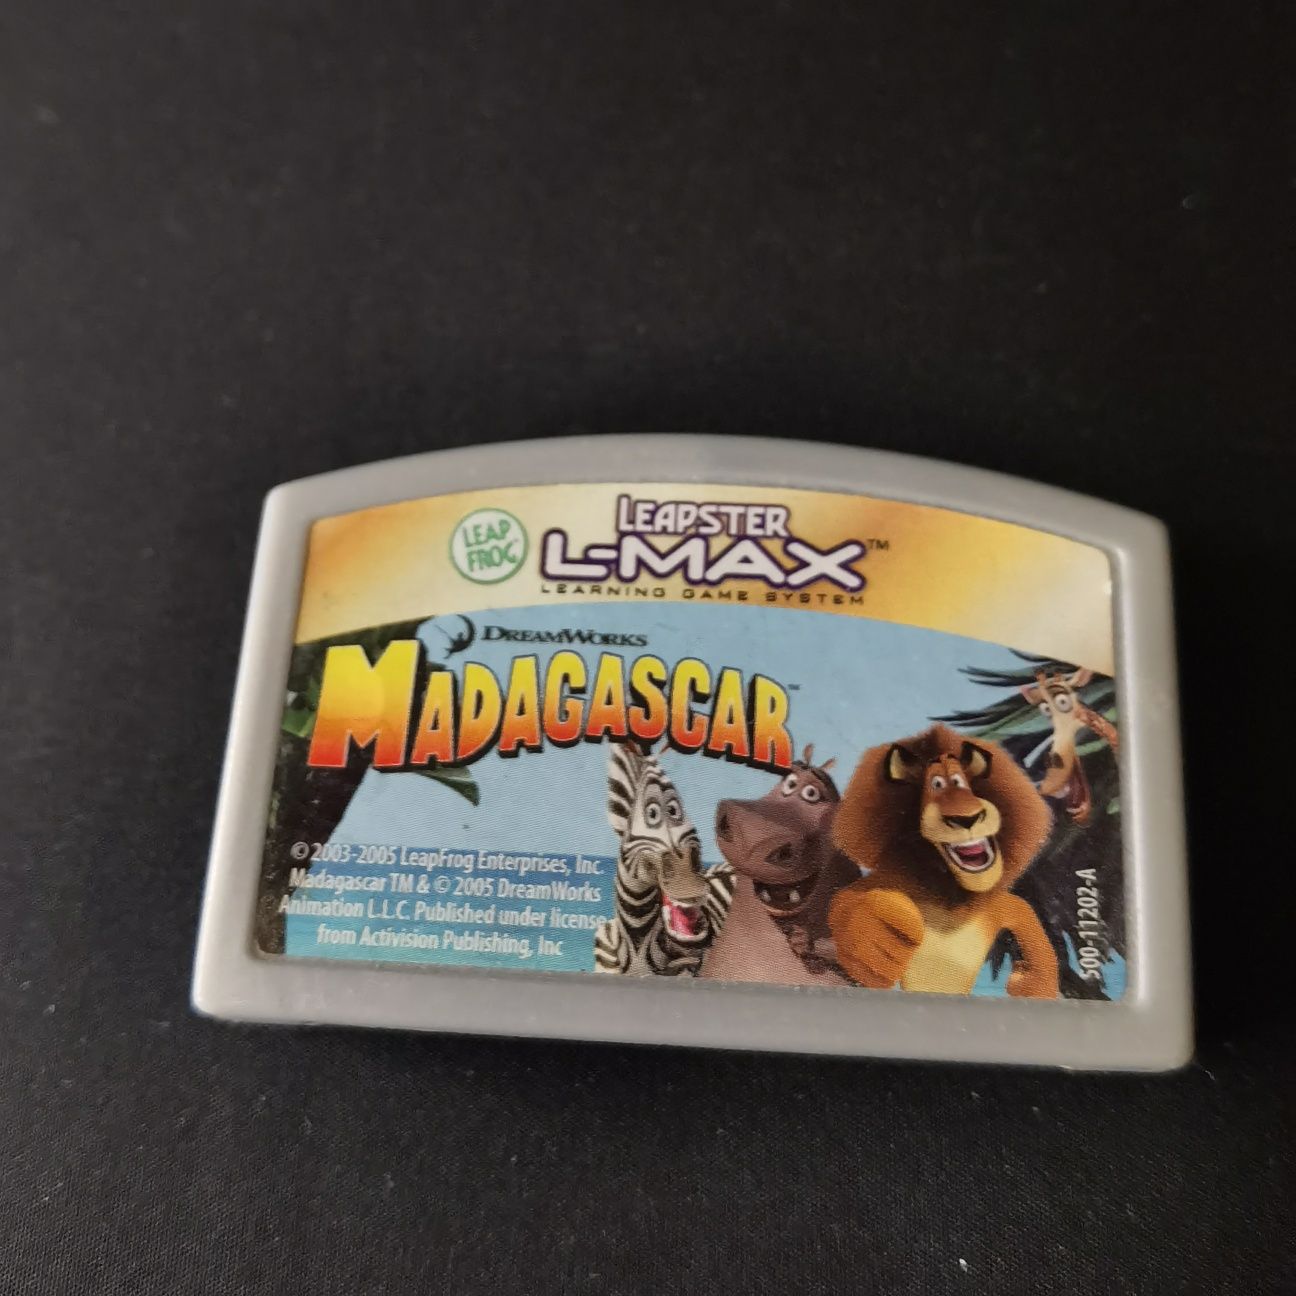 Madagascar Leapster game